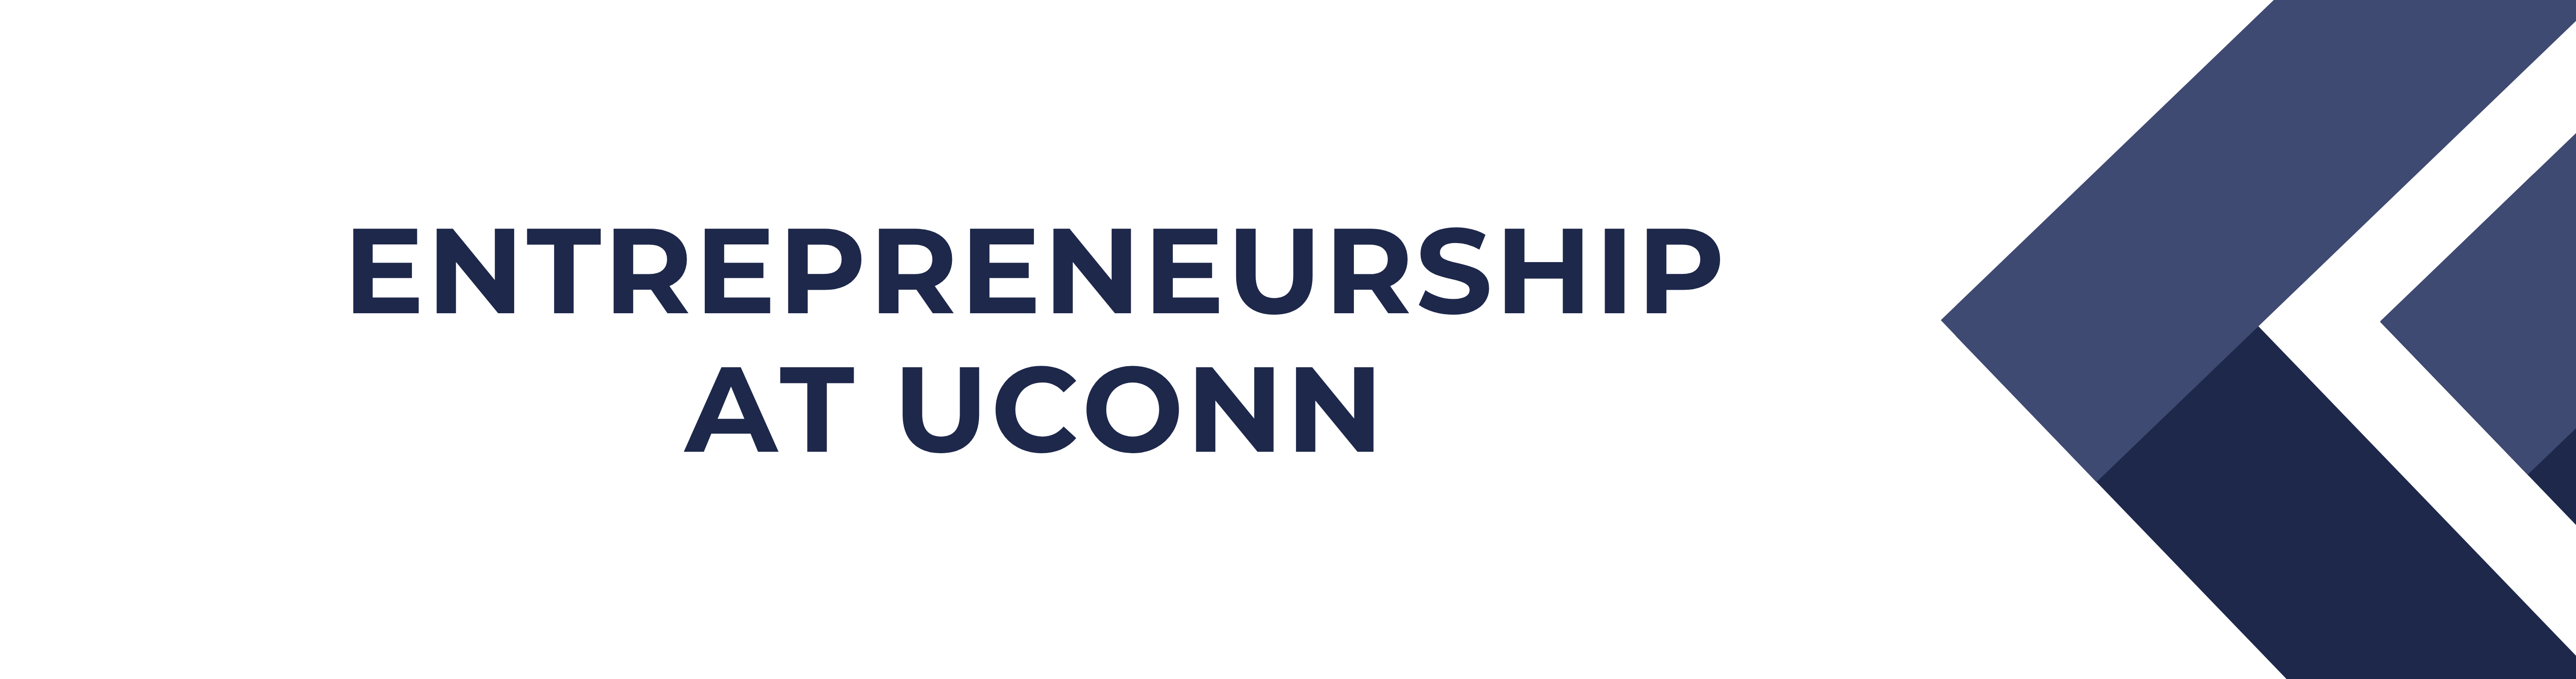 Entrepreneurship at UConn